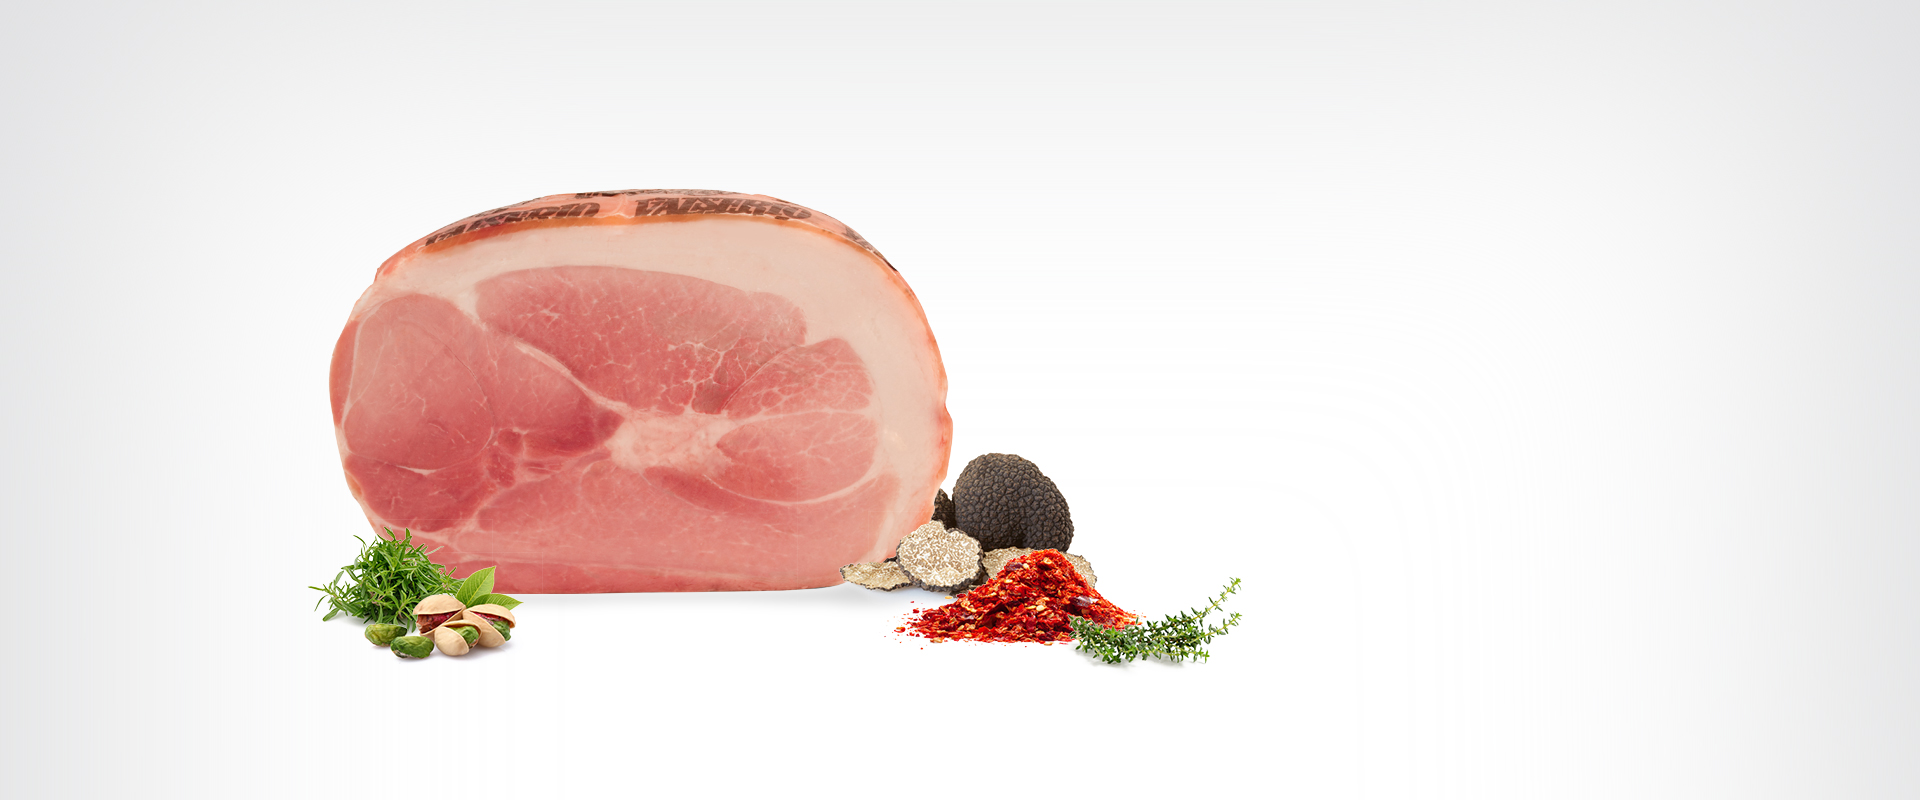 Modern tastes for savoury baked hams